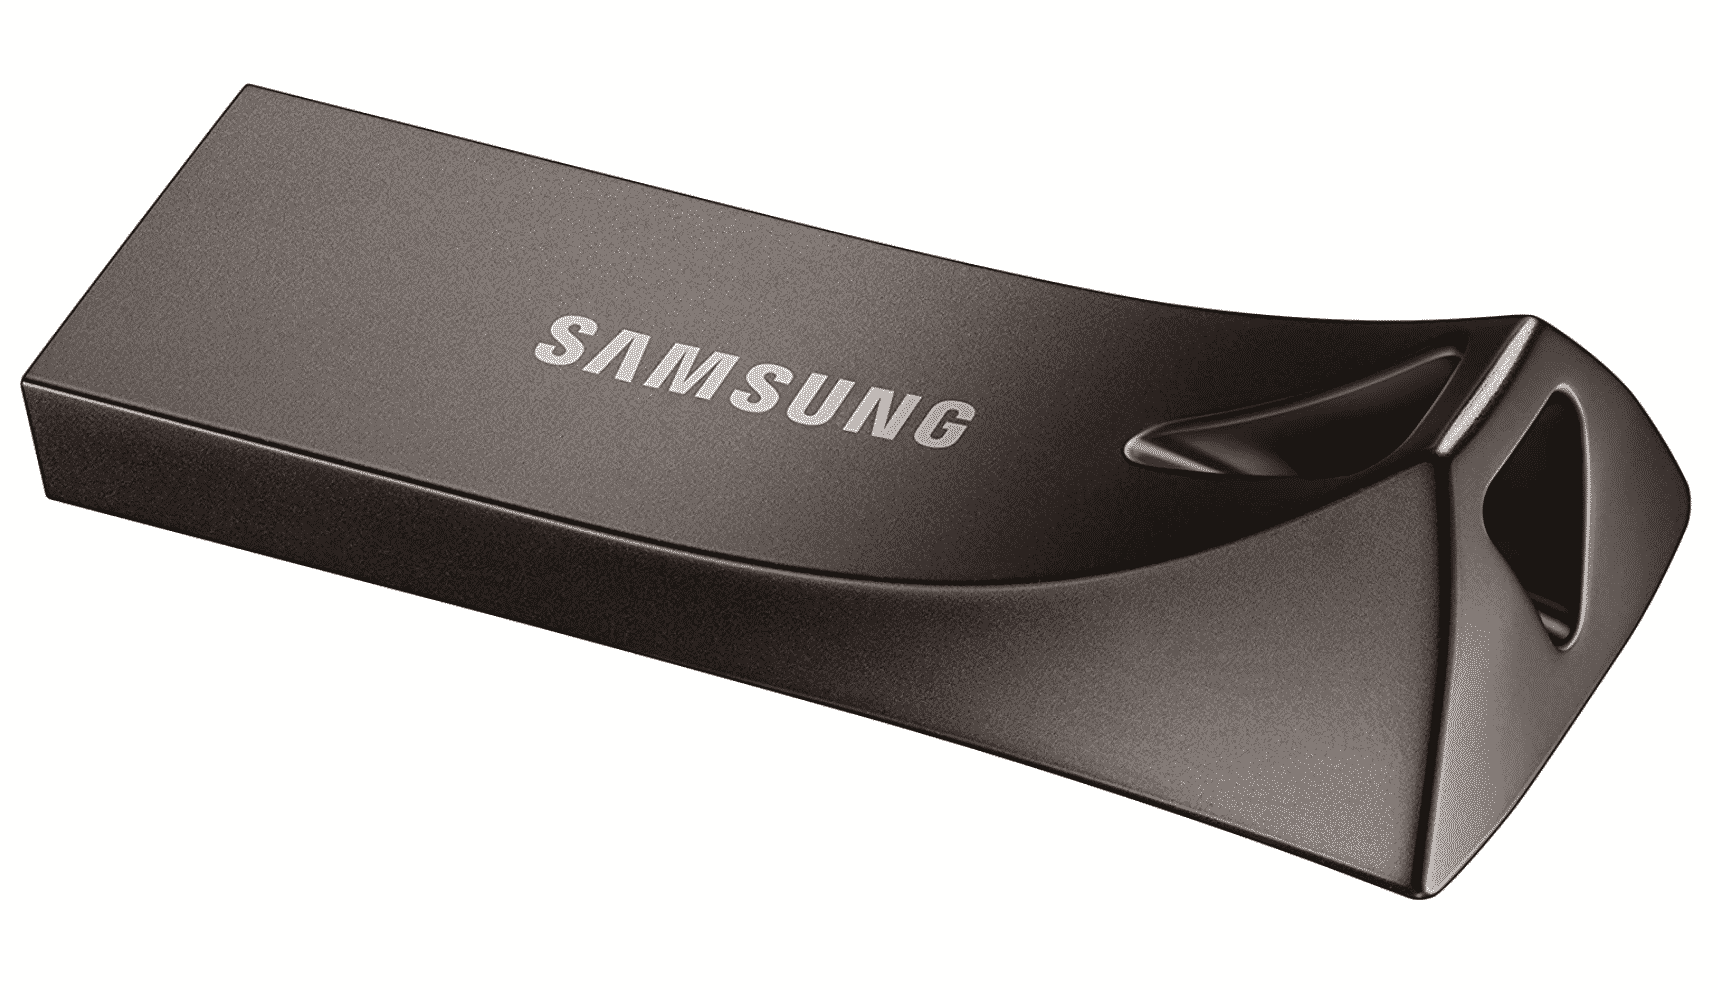 Samsung Bar Plus USB 3.1 Drive